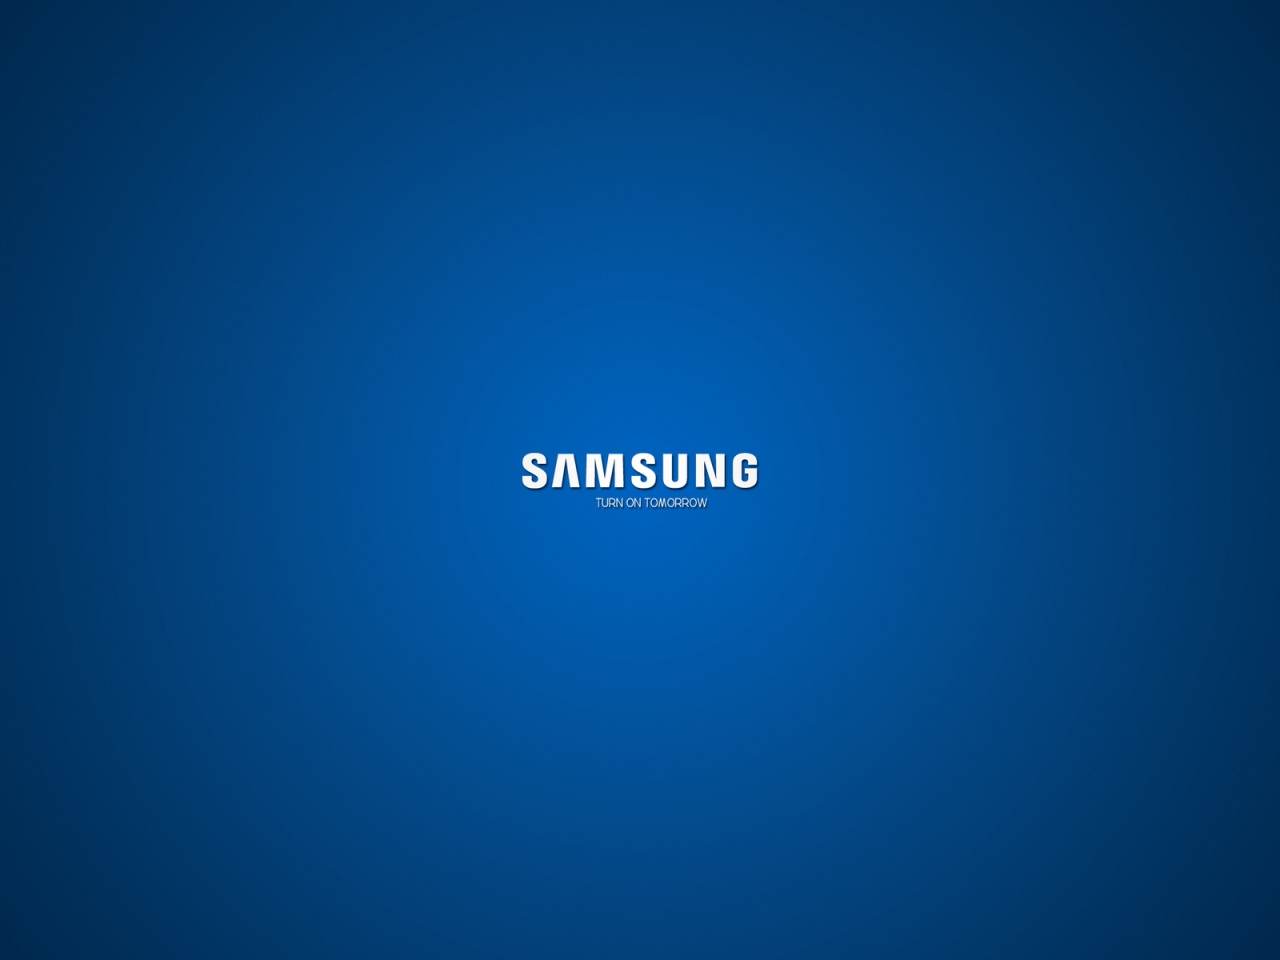 Samsung for 1280 x 960 resolution